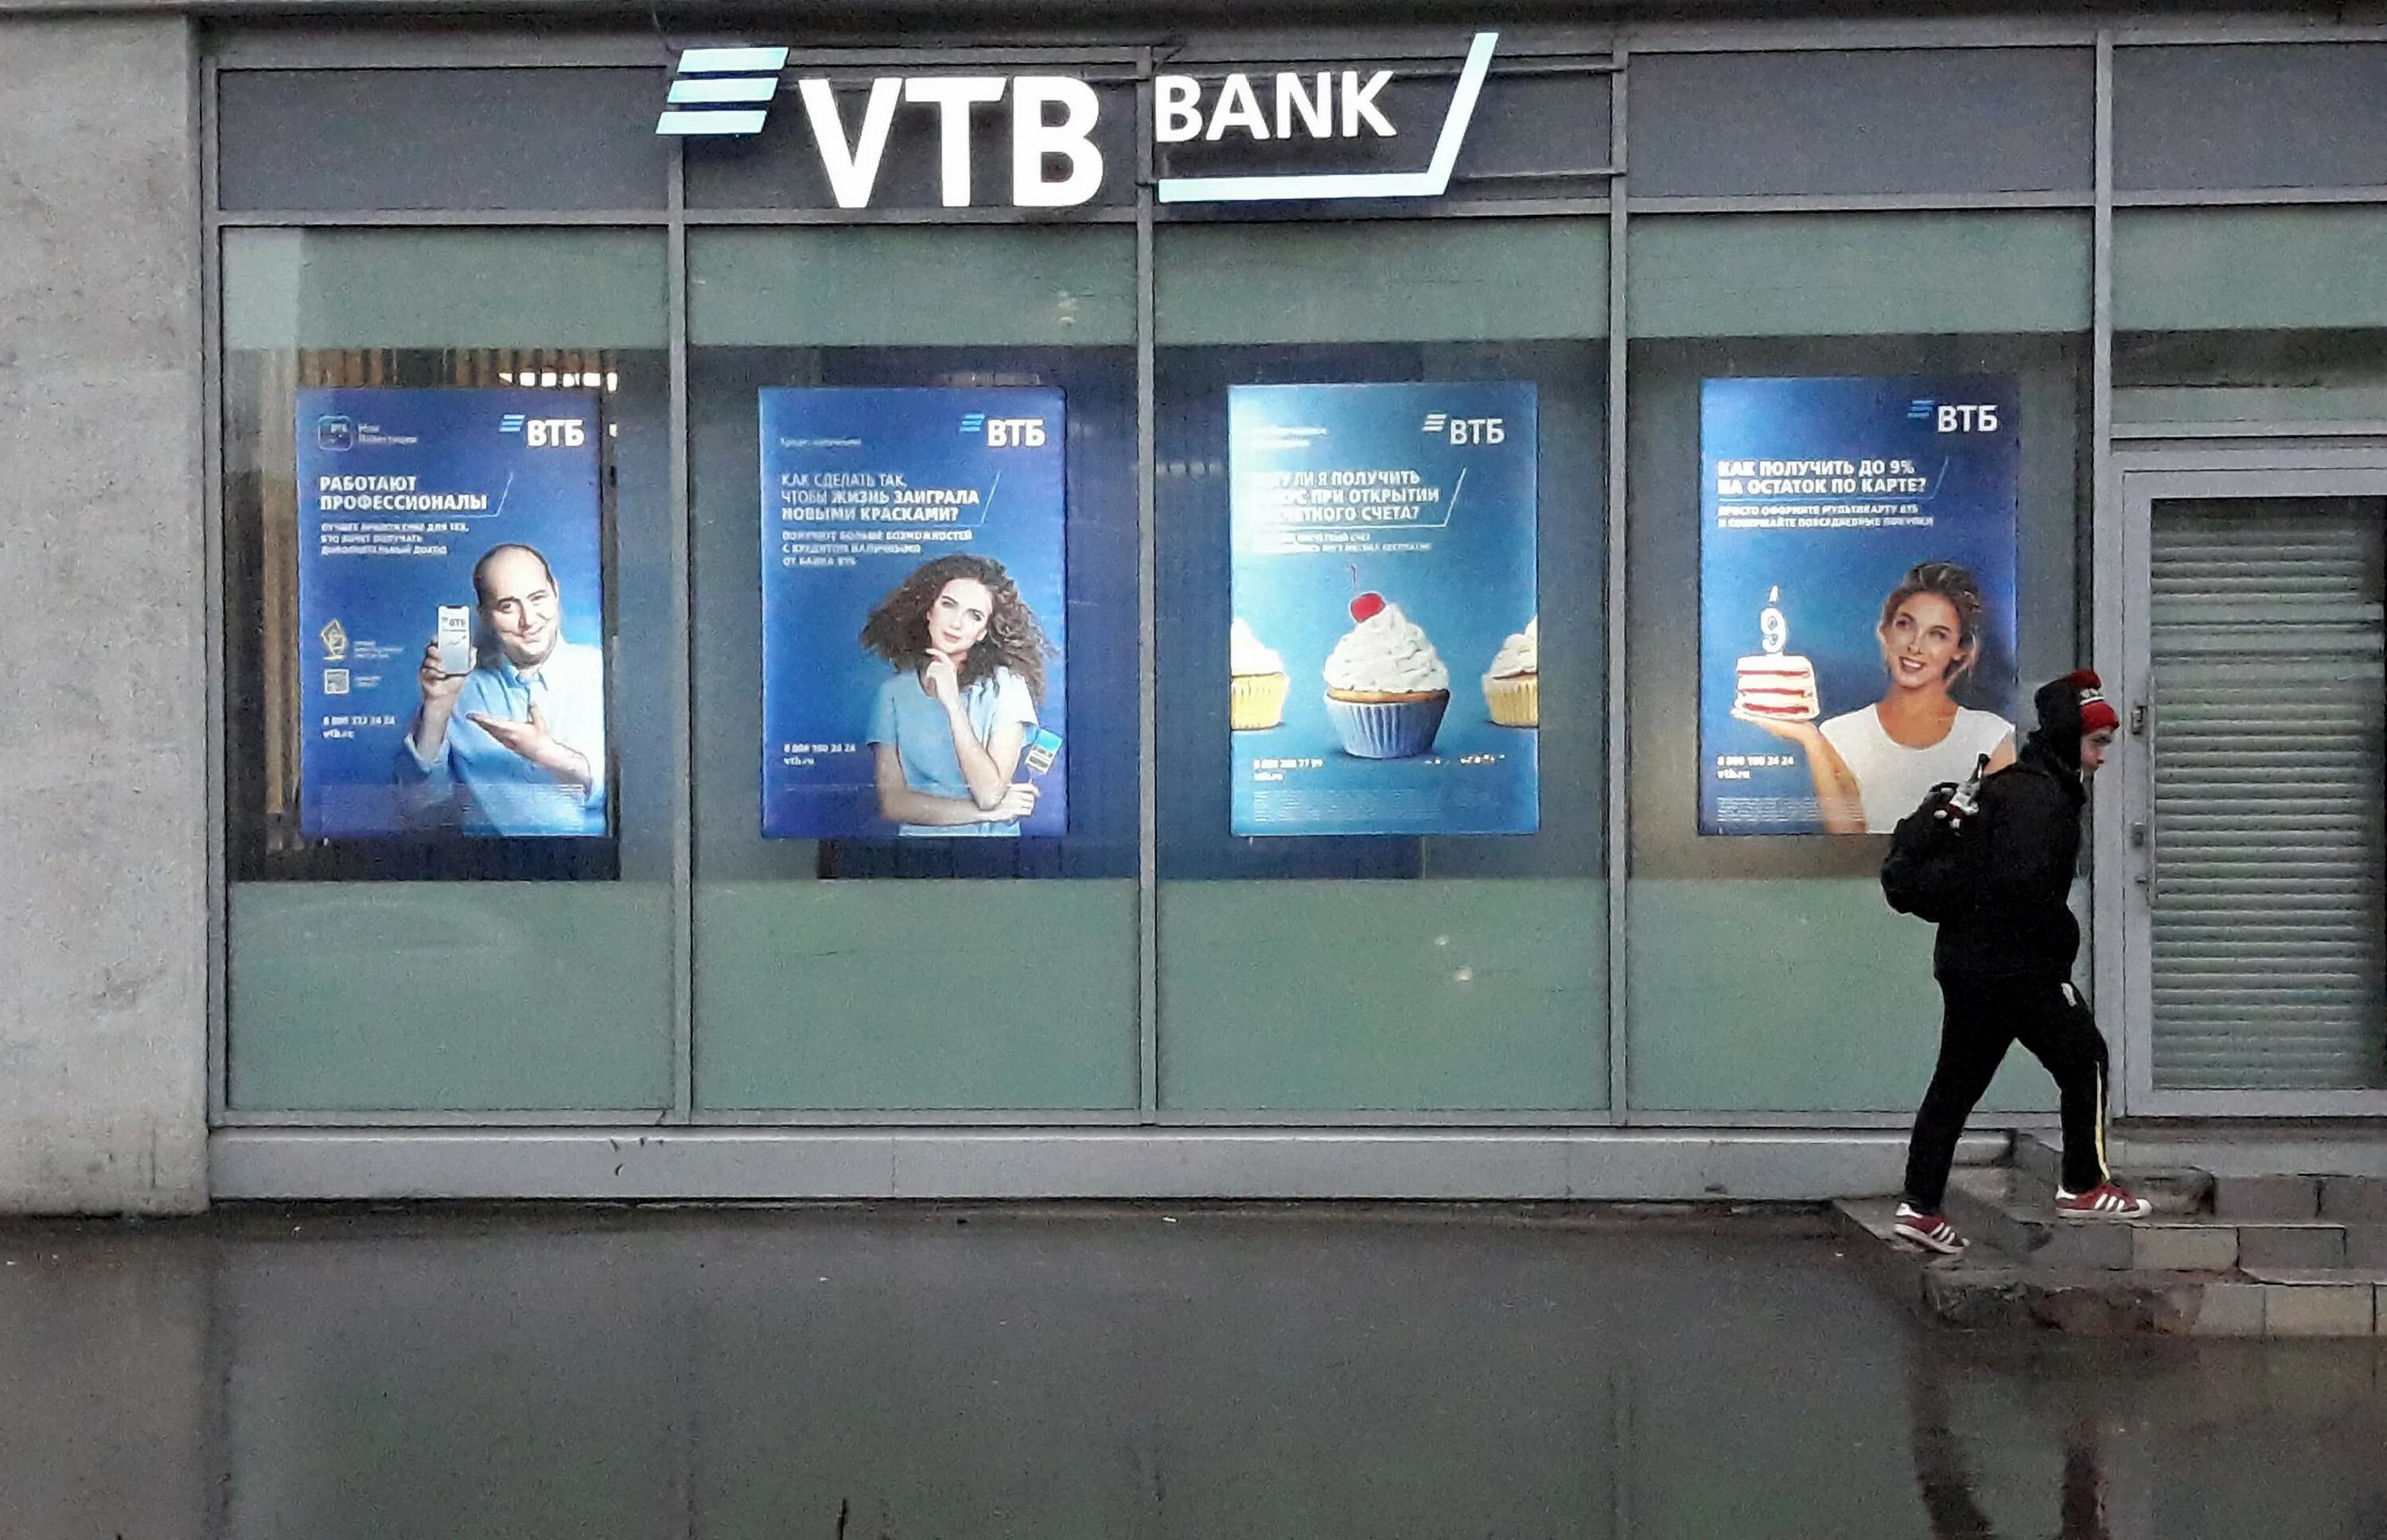 ВТБ банк. Банк ВТБ витрина. Реклама банка ВТБ. Плакаты банка ВТБ.